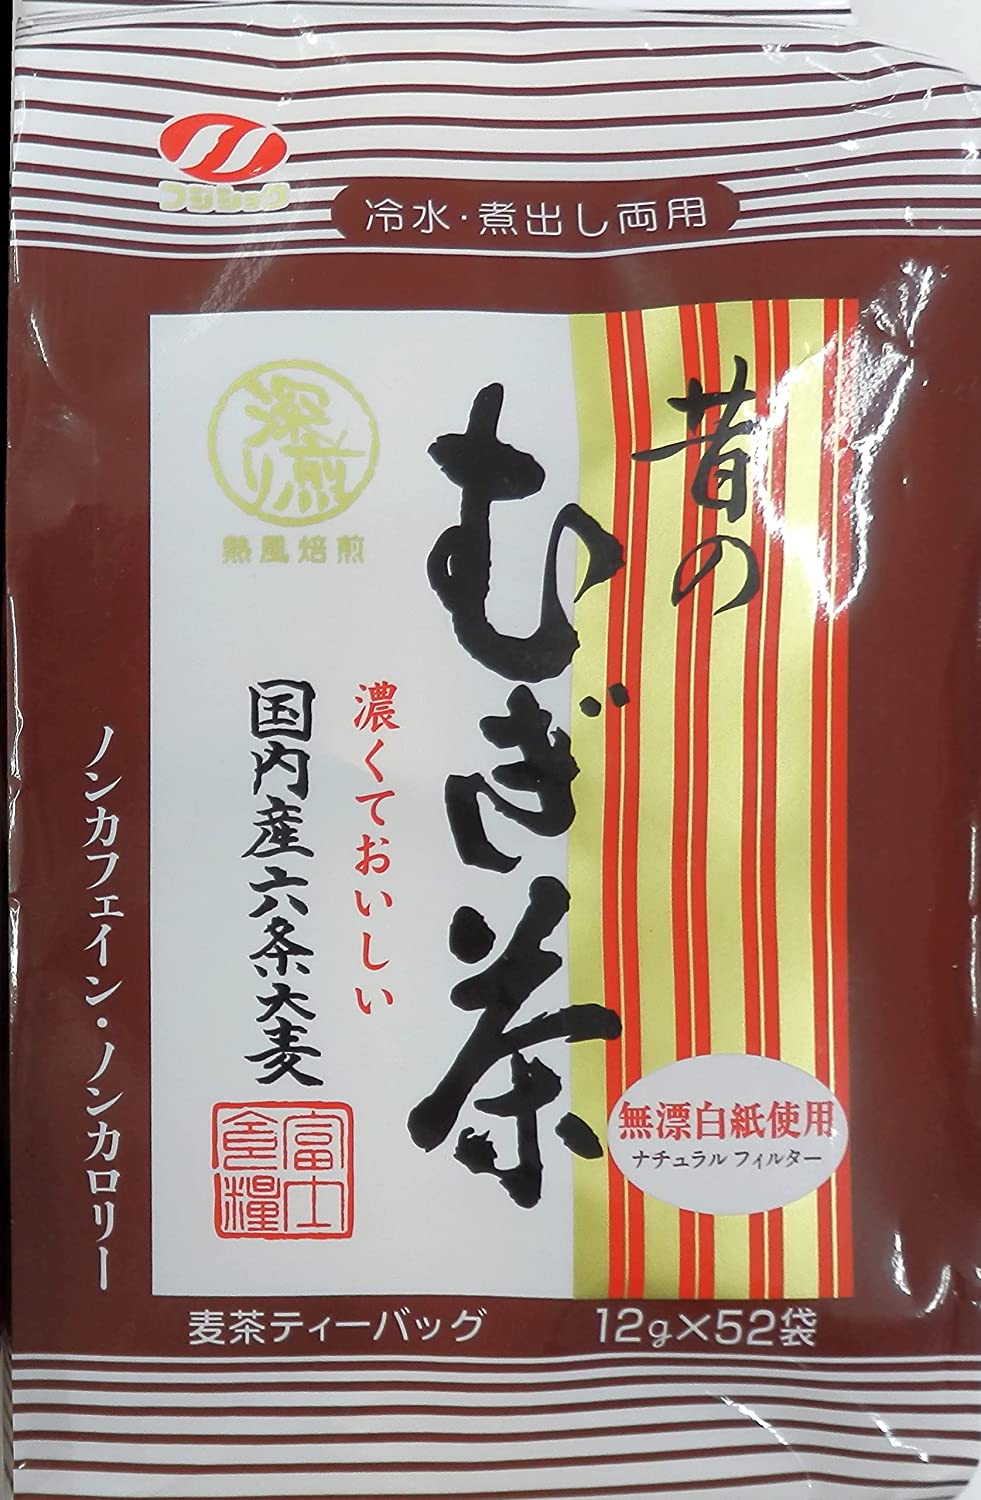 Mugicha Barley Tea 12g x 52P x 2 Bags - NihonMura